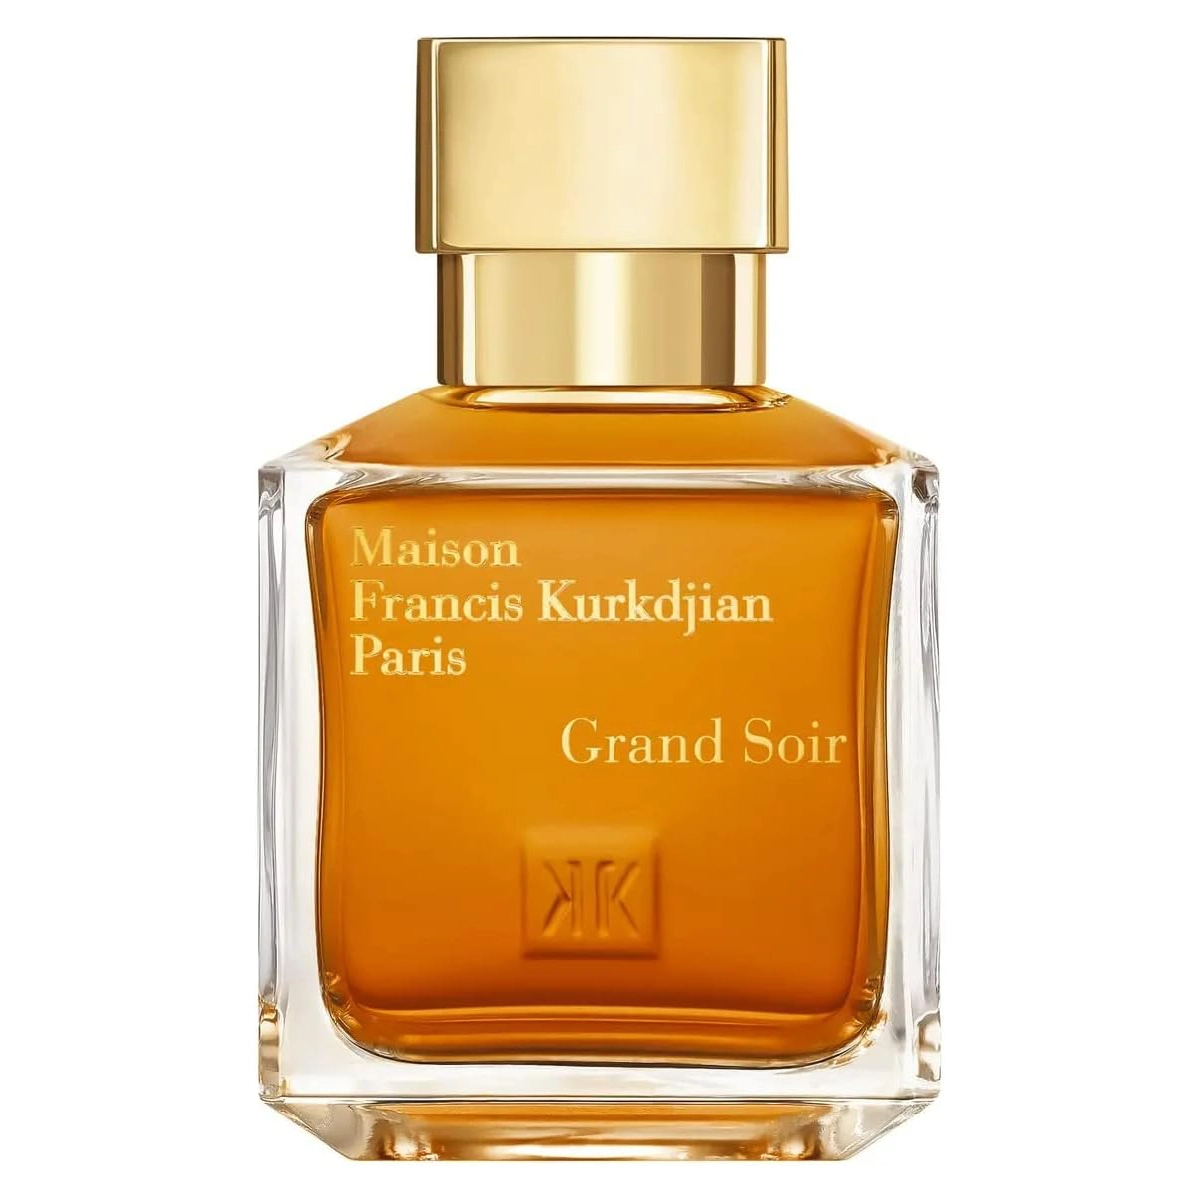 Maison Francis Kurkdjian Grand Soir perfume bottle against a pristine white background.